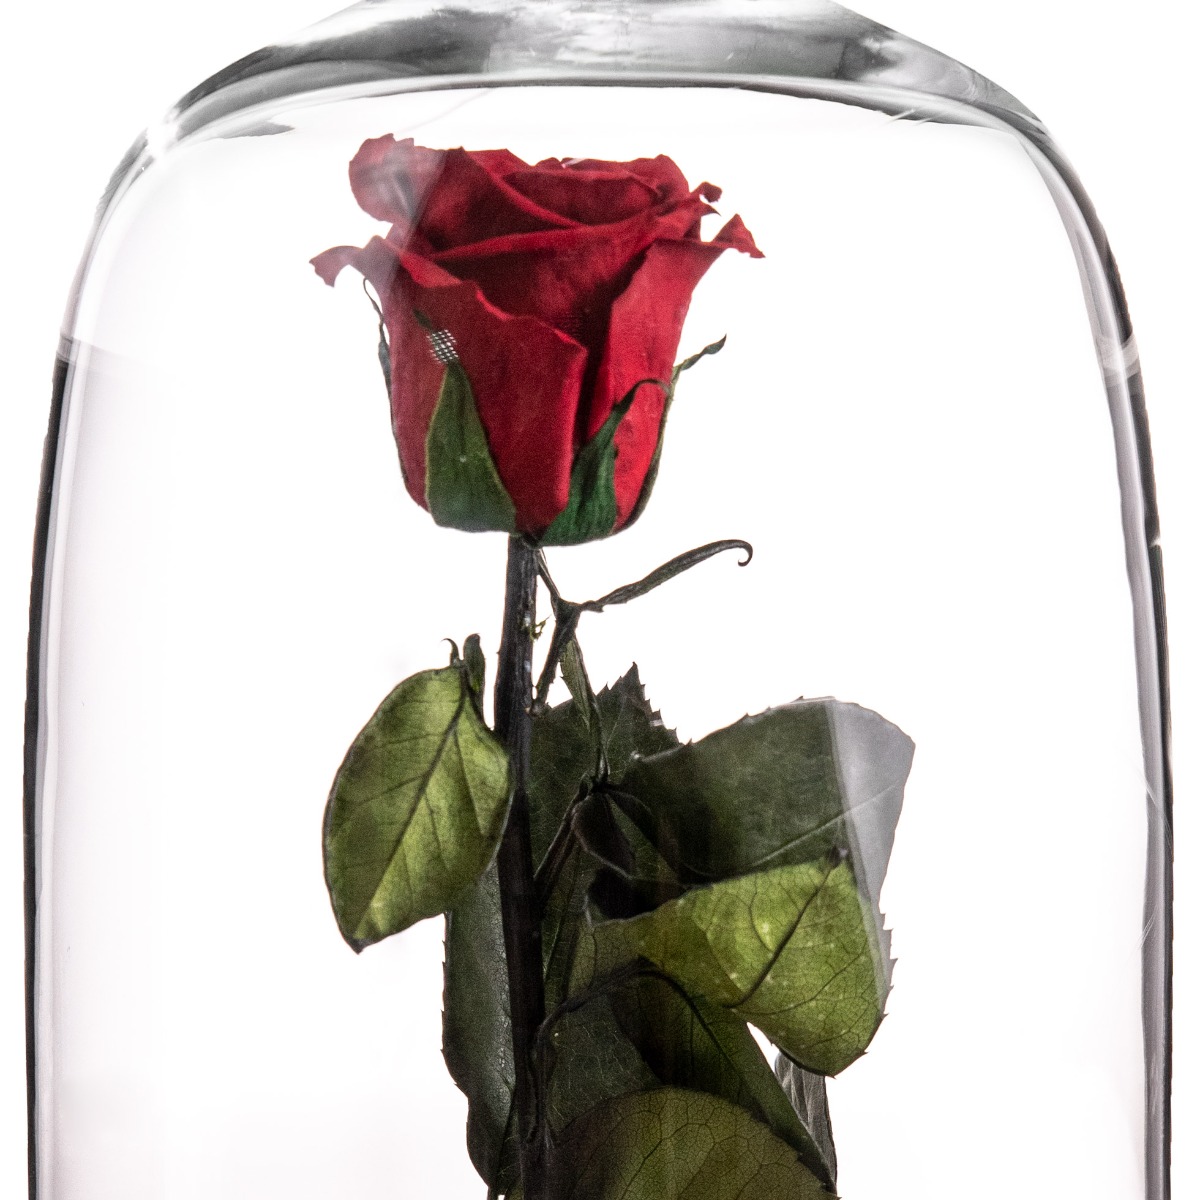 Trandafir criogenat in cupola de sticla